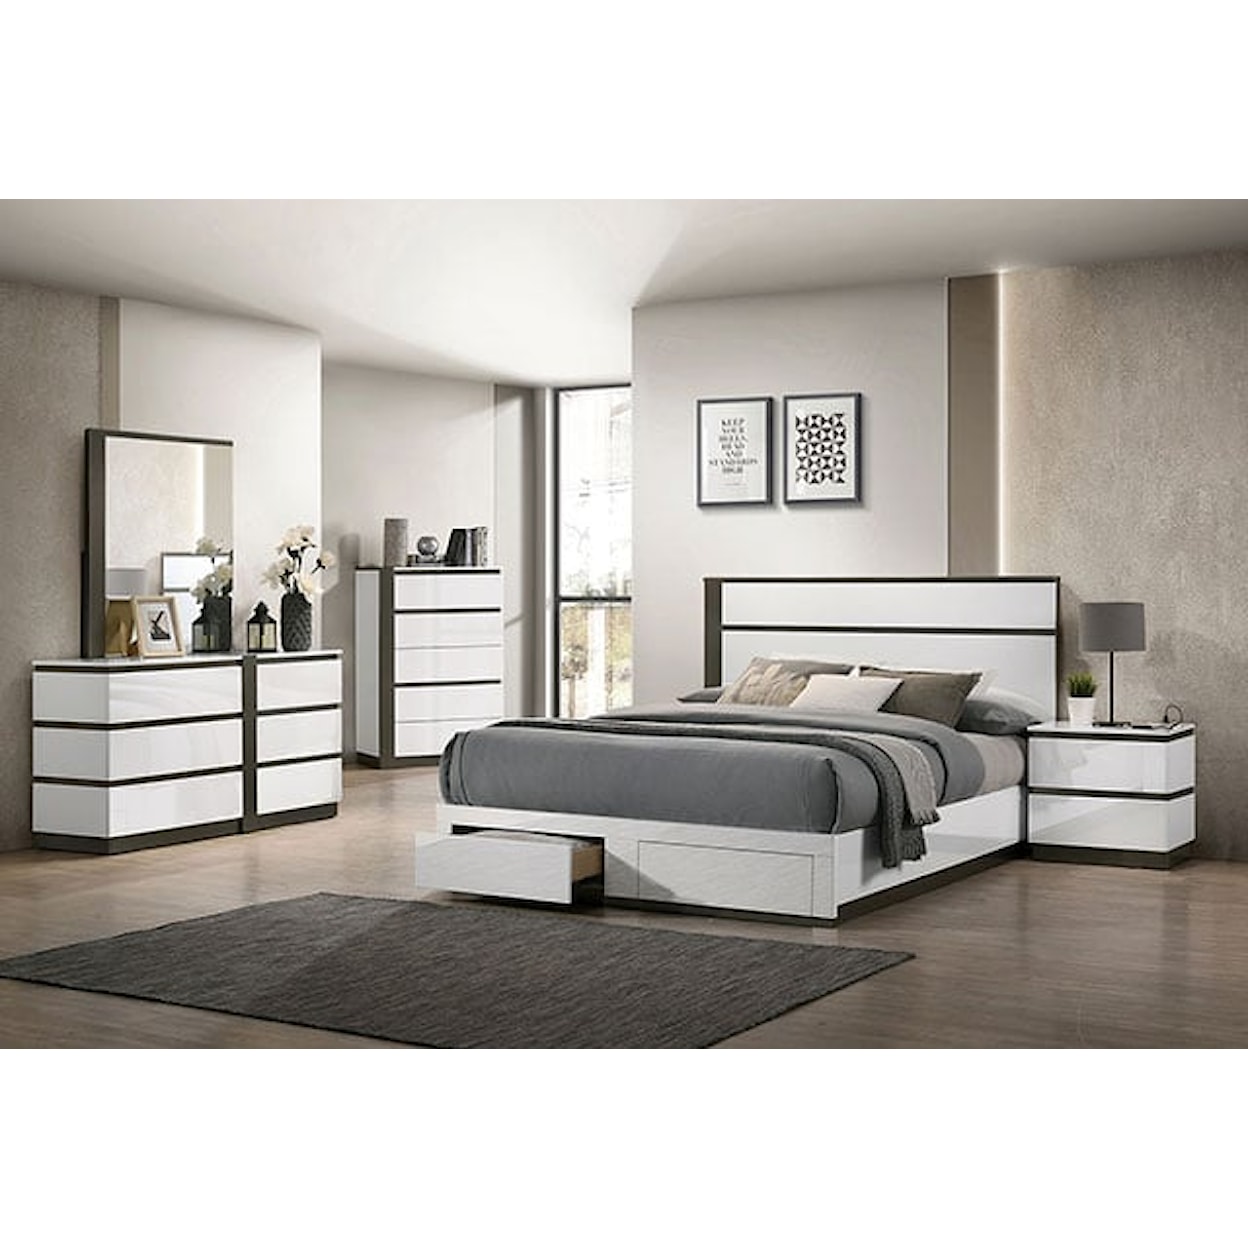 Furniture of America Birsfelden California King Panel Bed with Storage